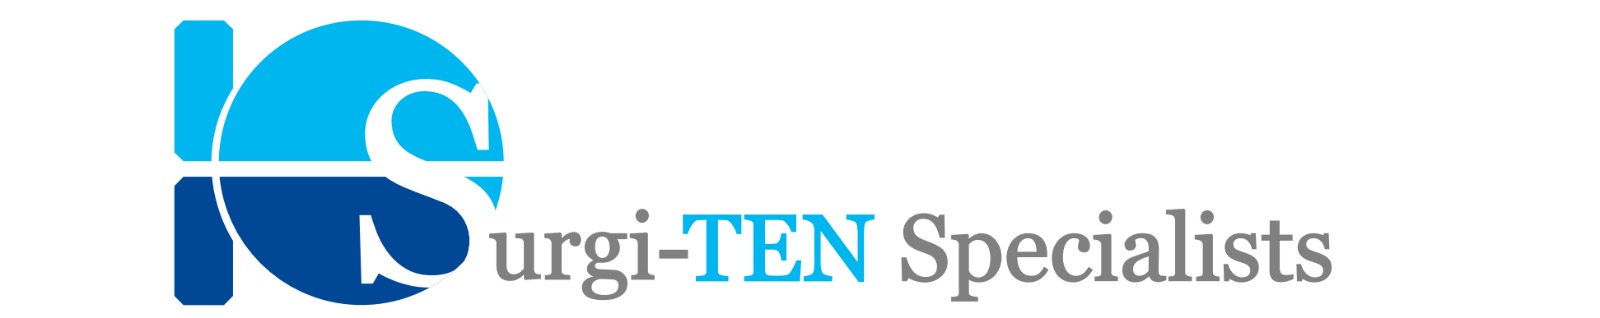 Surgi-ten Specialists Pte. Ltd. logo